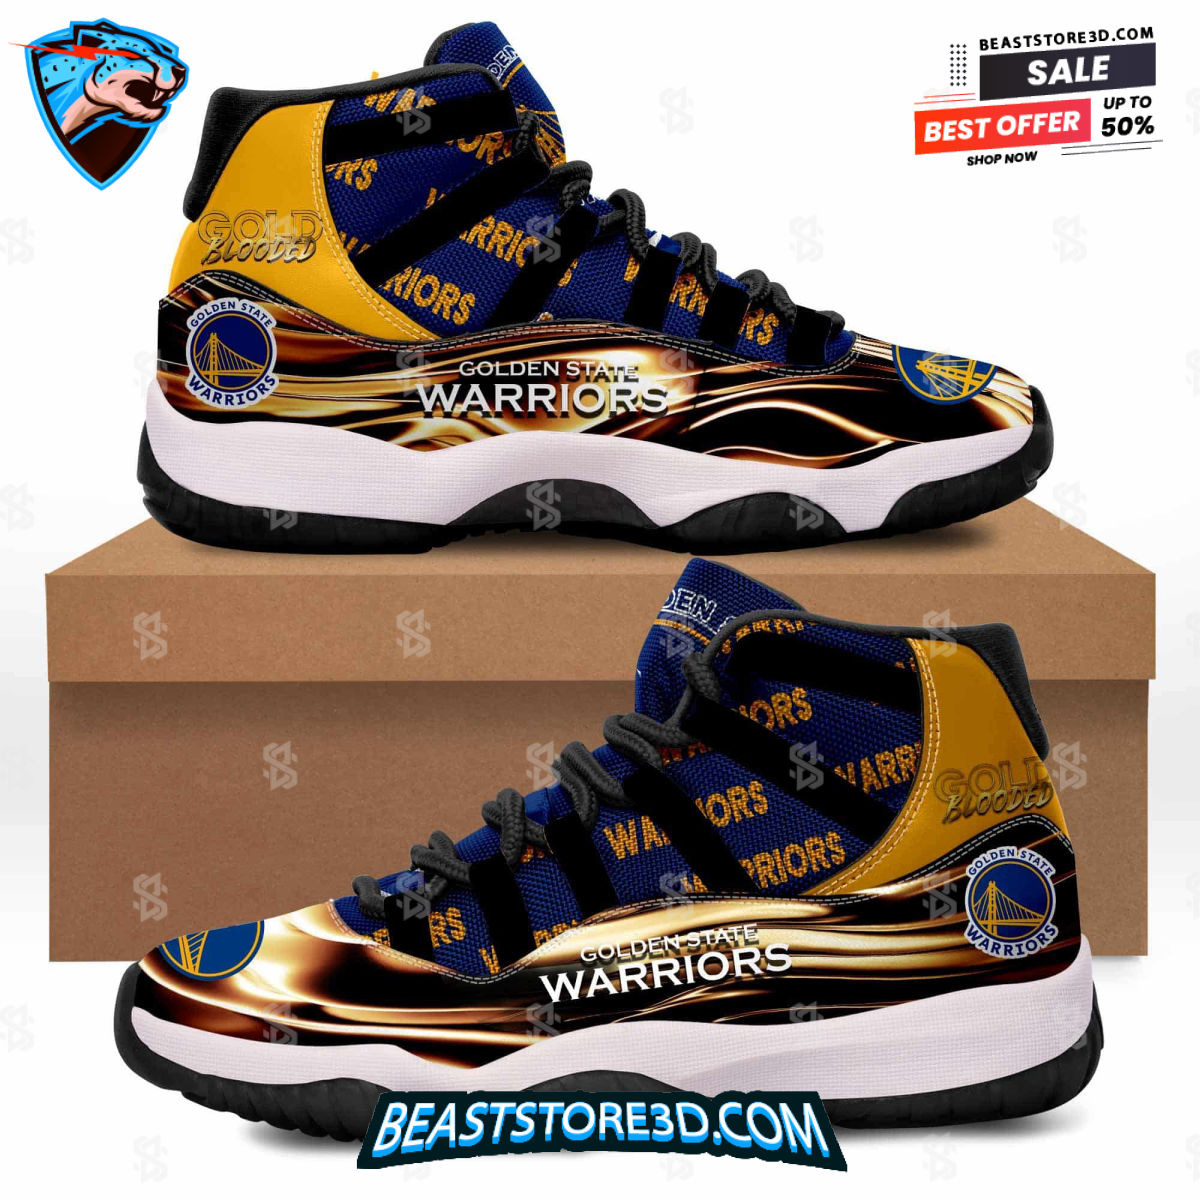 Golden State Warriors NBA Champions Air Jordan Retro 11 Shoes